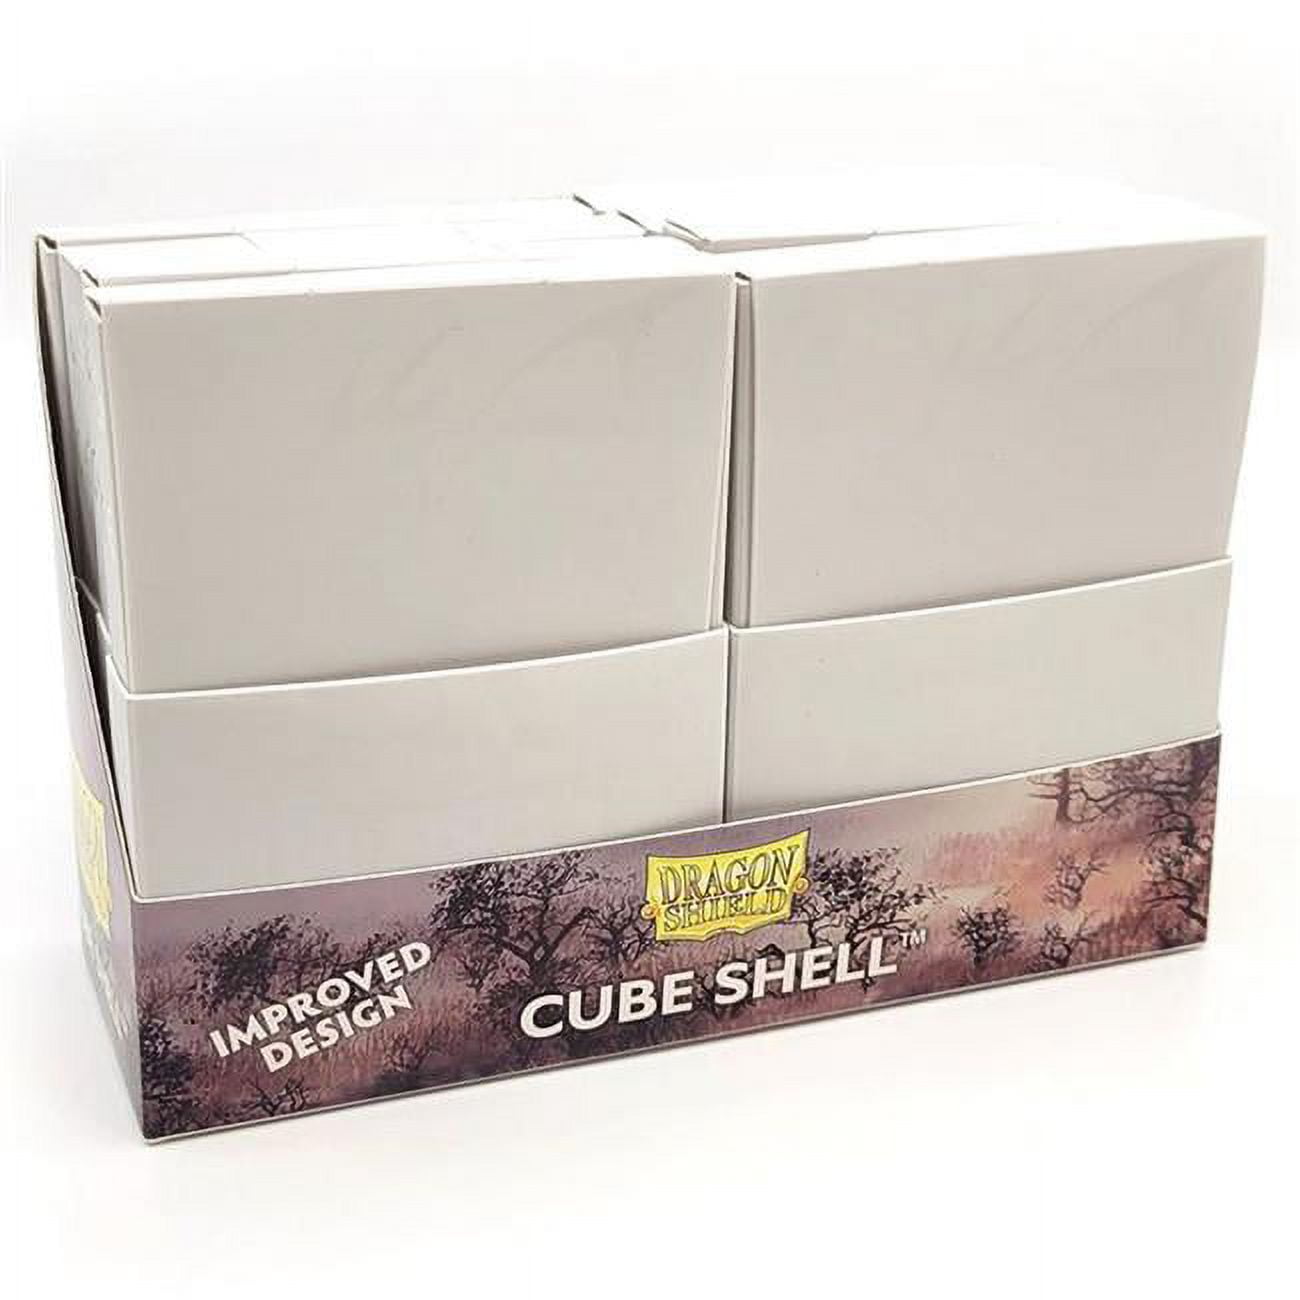 Picture of Arcane Tinmen ATM30535 Cube Shell Card Deck Box, Ashen White - 8 Piece